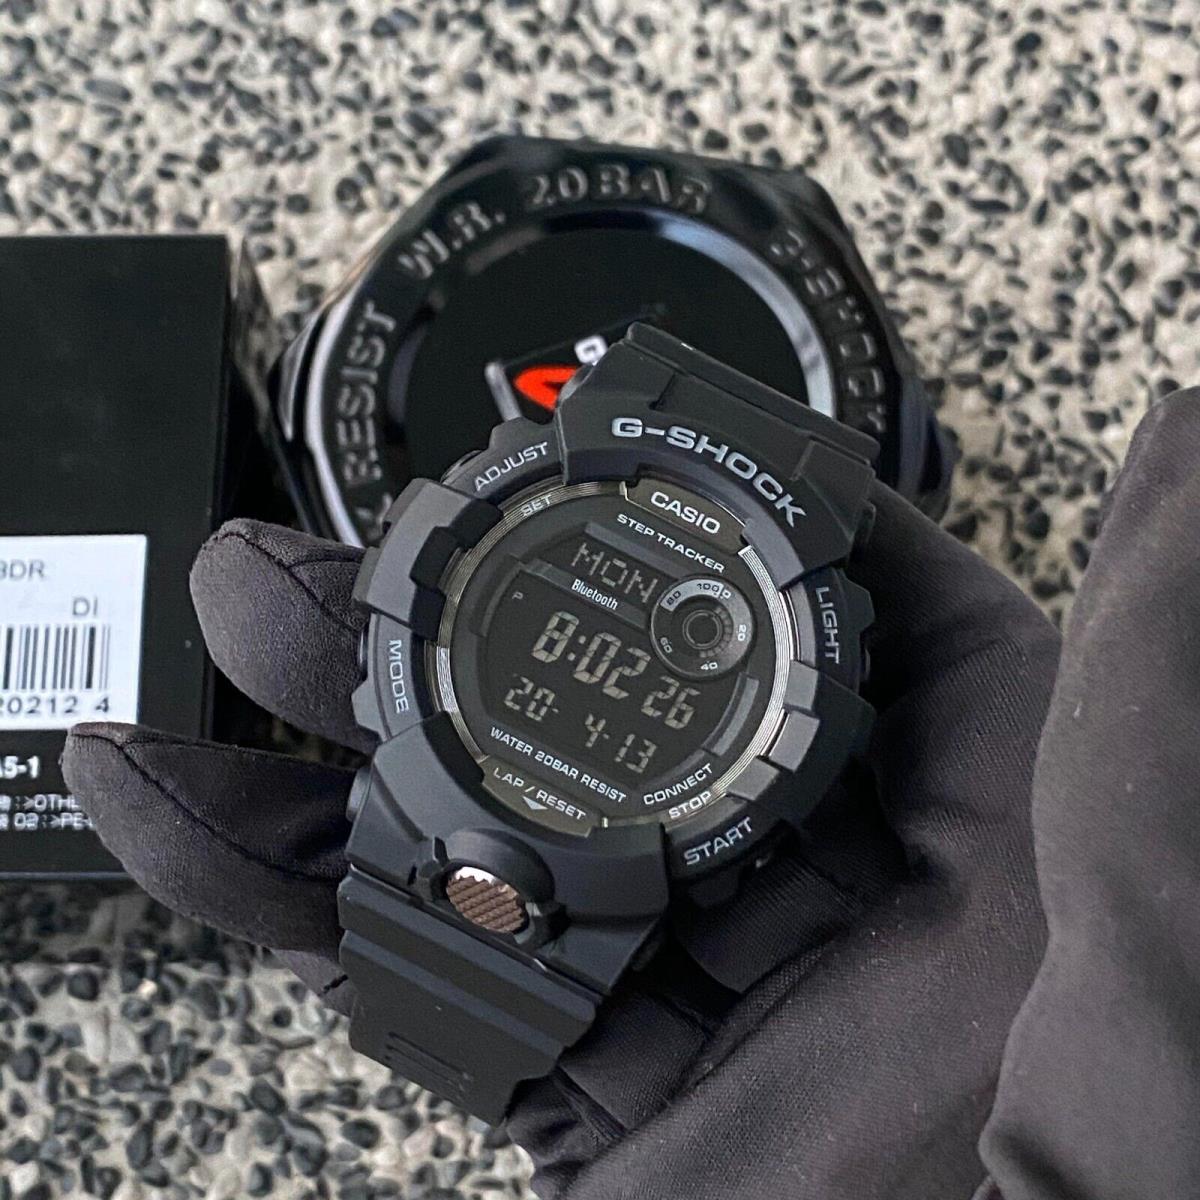 | Super Illuminator Digital GBD800-1B Black - - Watch Casio Black G-shock Fash watch Dial, Black GBD-800-1B | Direct Bezel Band, Black Casio